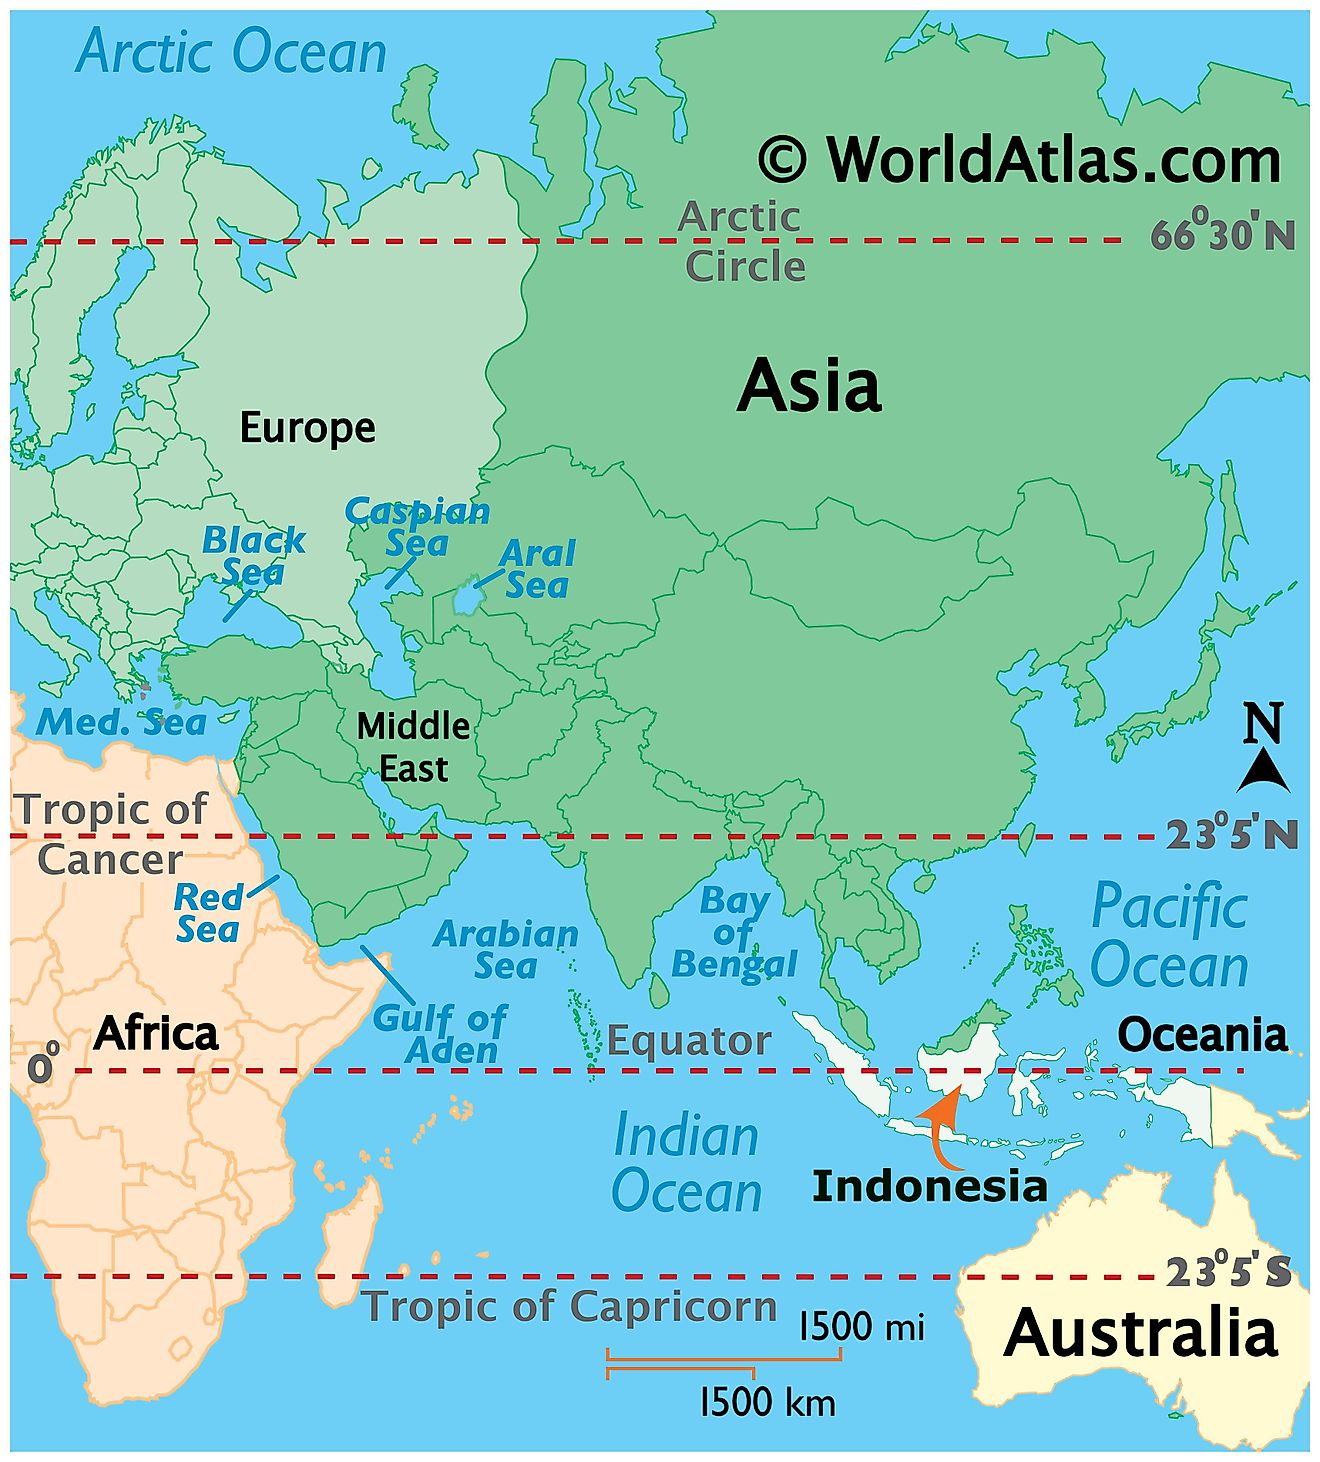 java and sumatra on world map